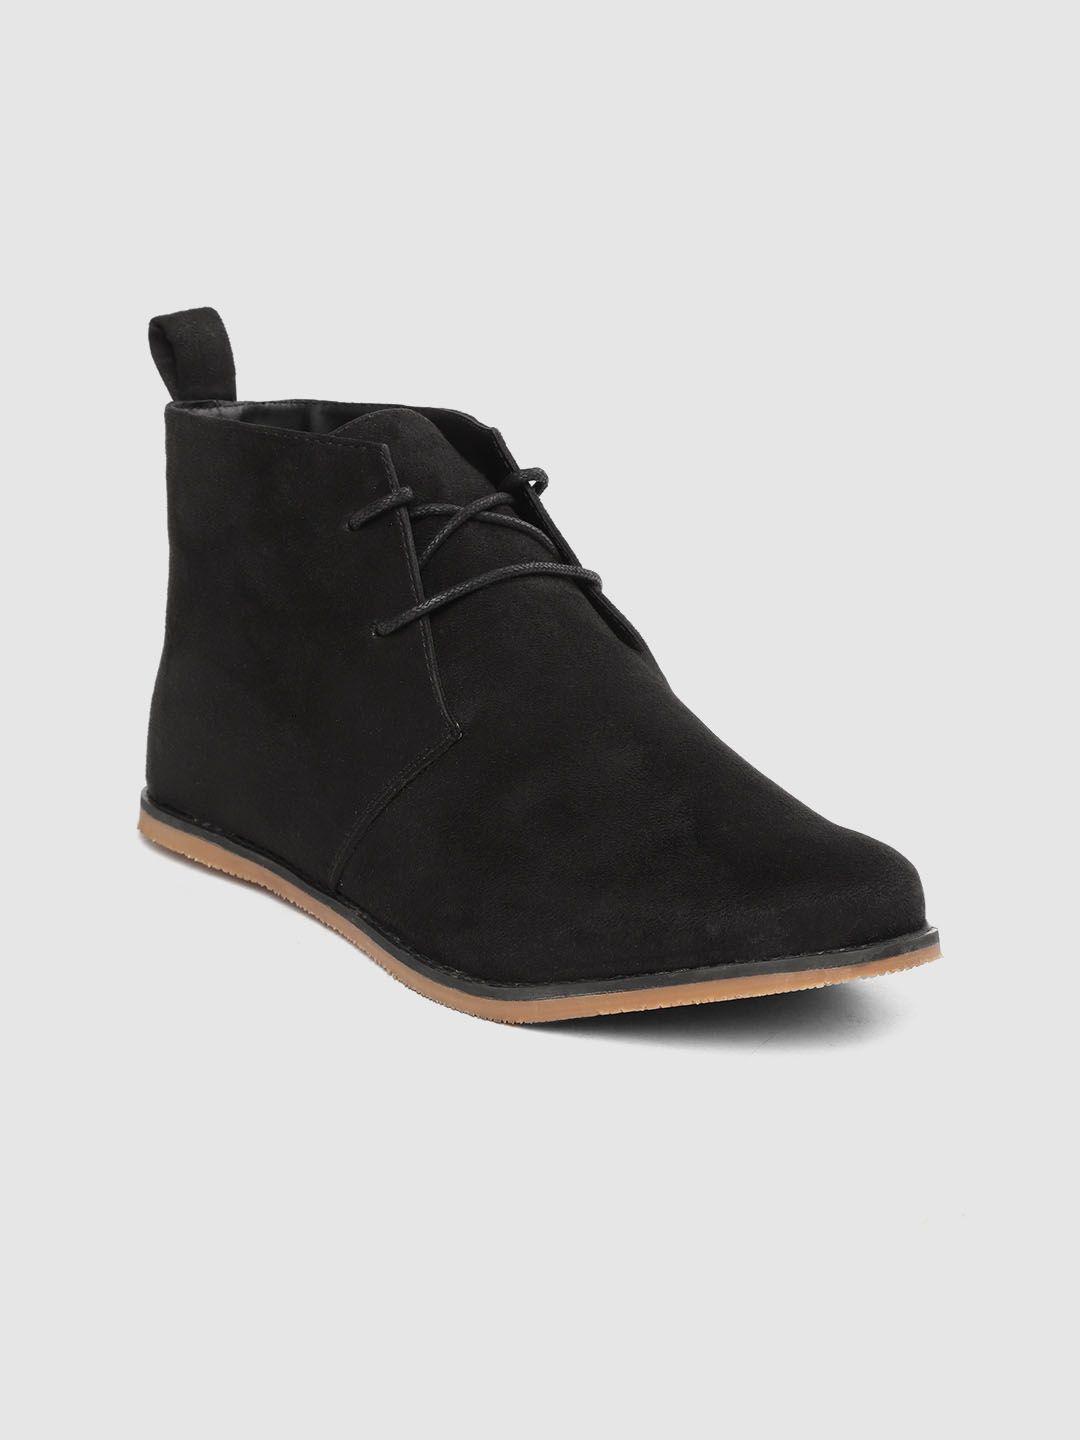 carlton london women black solid mid-top flat chukka boots